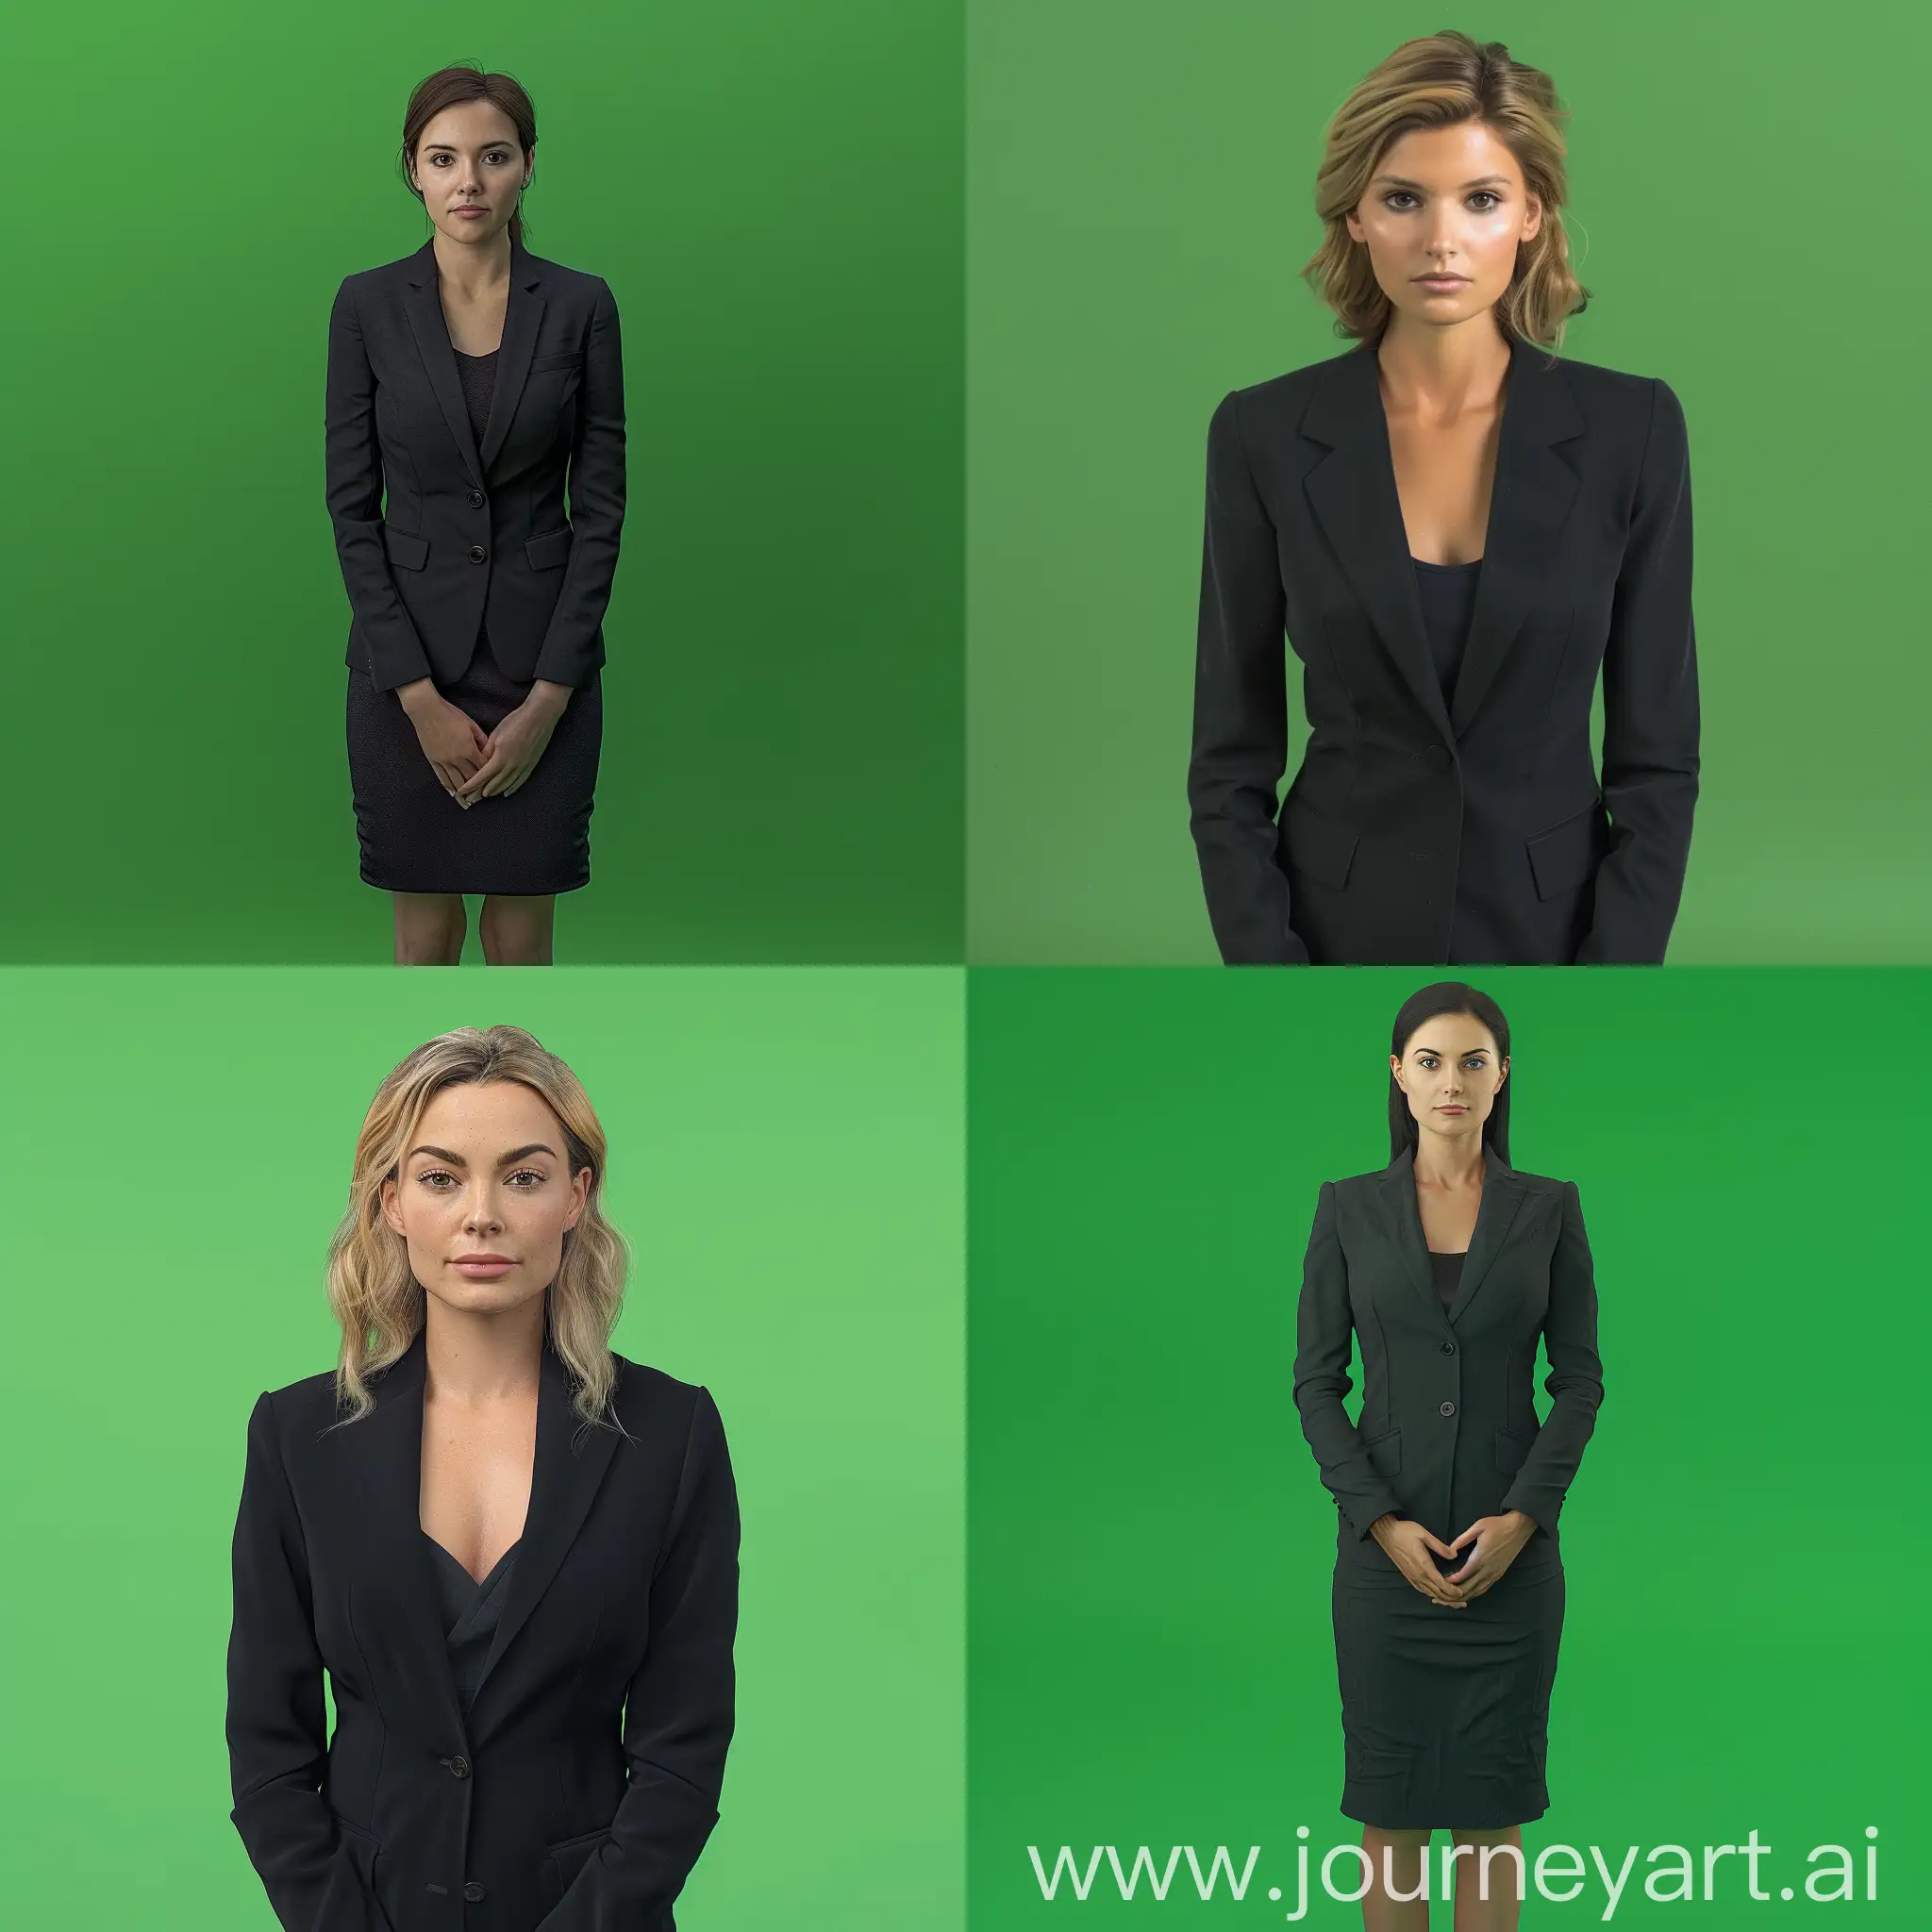 Formal-Female-News-Presenter-Standing-Upright-on-Chroma-Green-Background